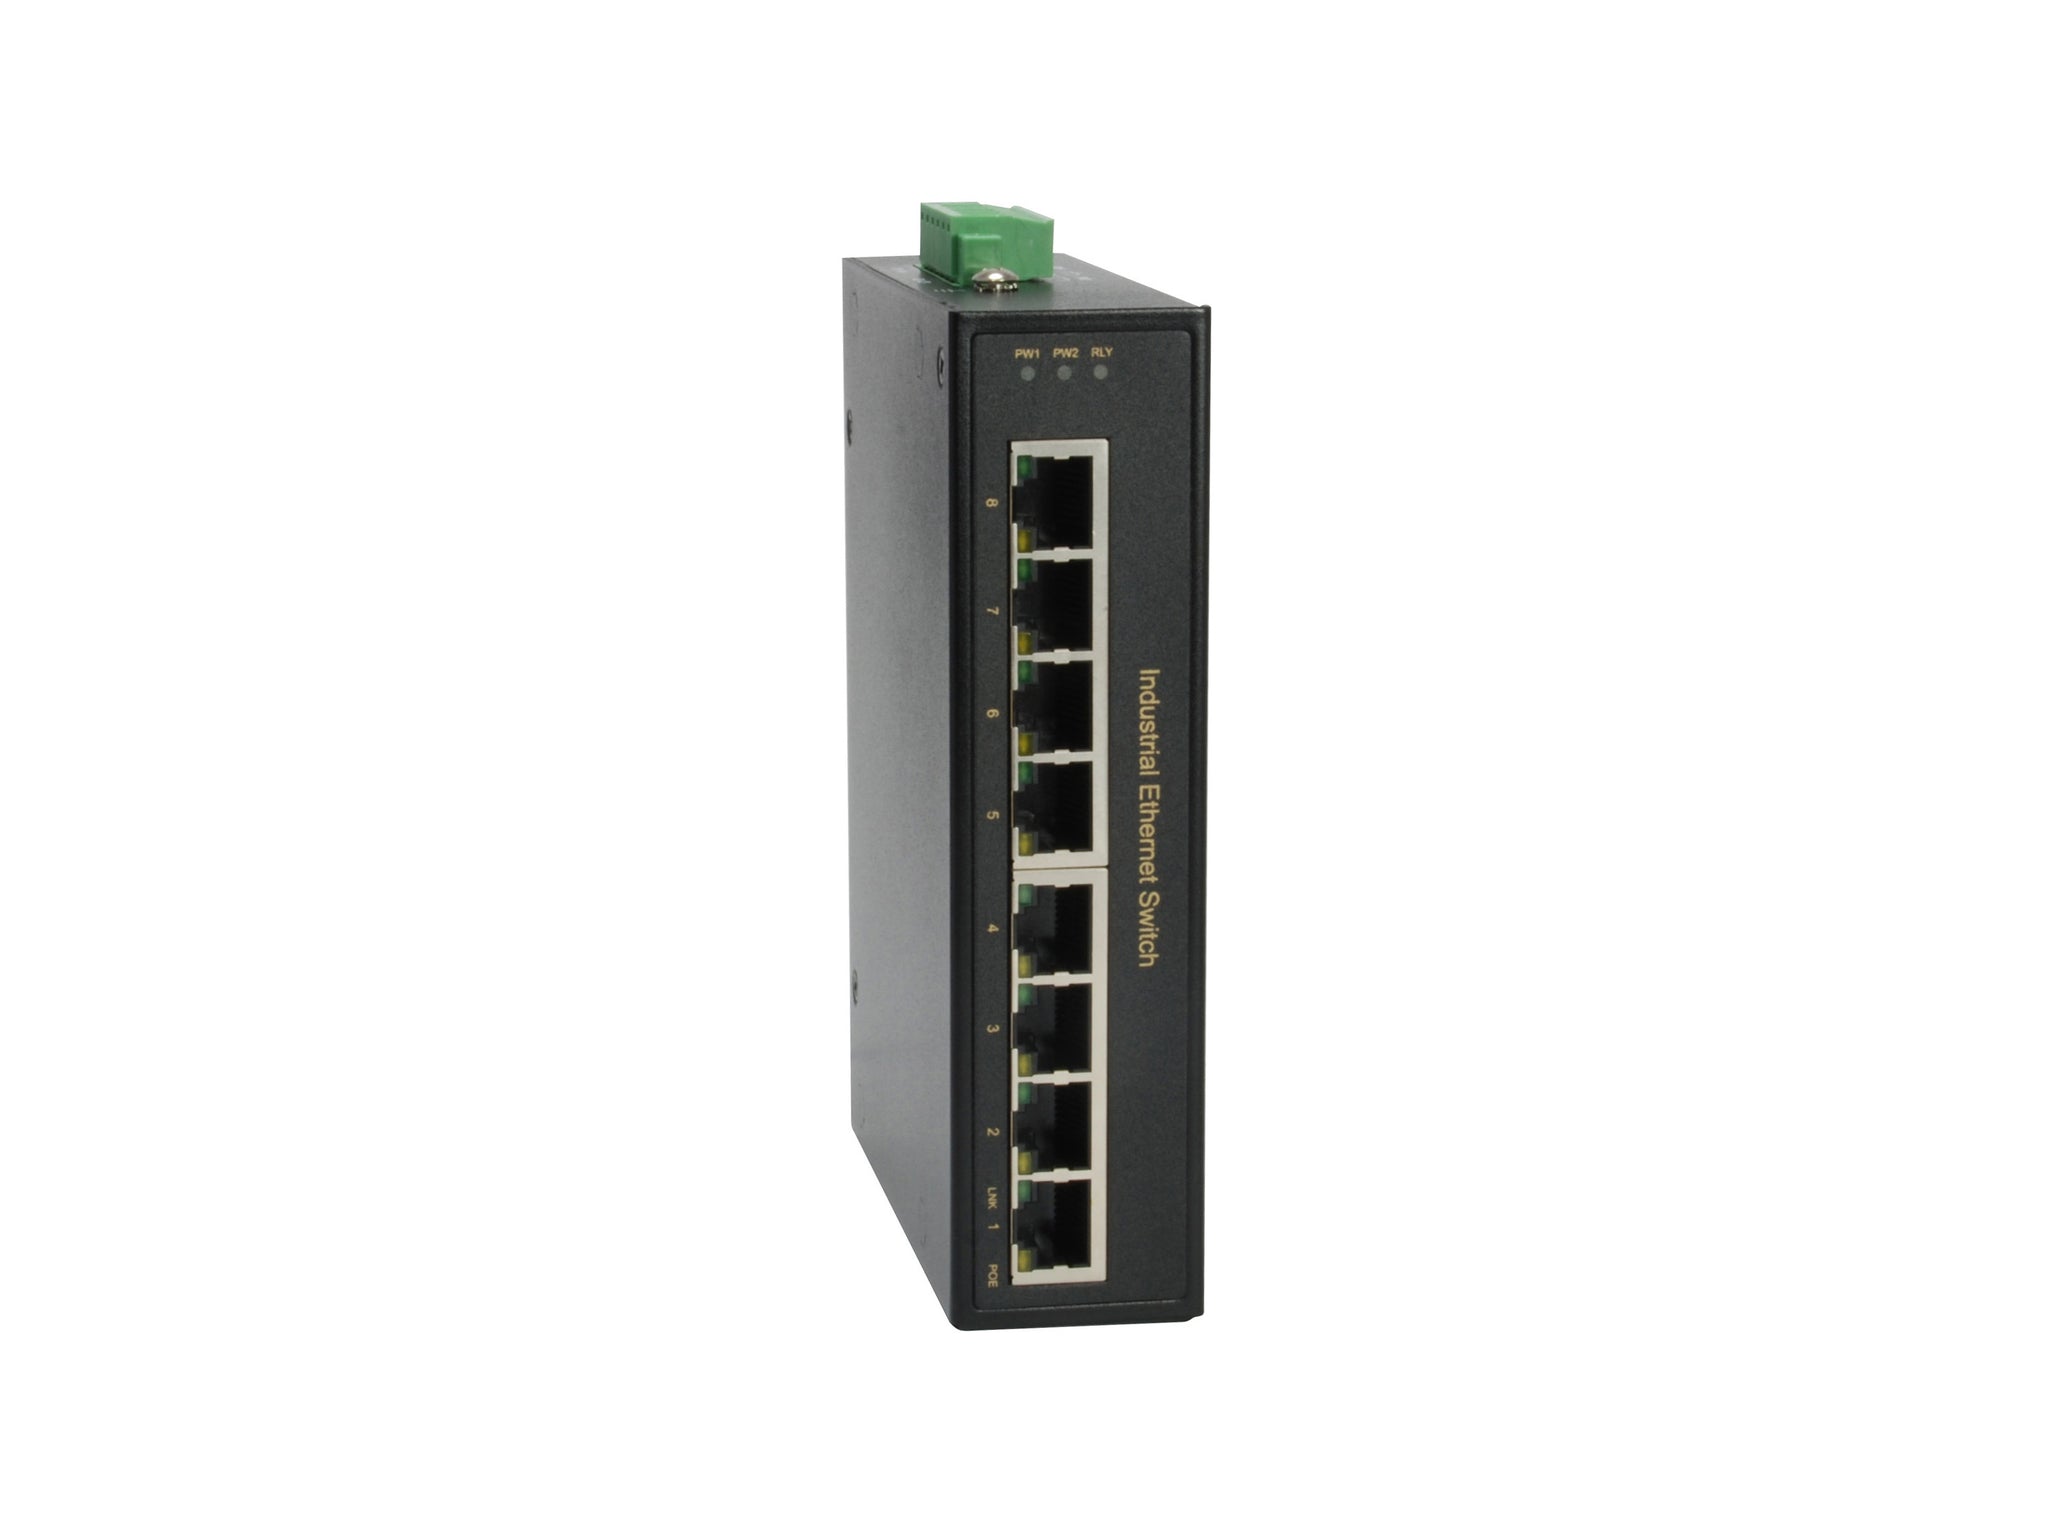 IFP-0801 8-Port Fast Ethernet PoE Industrial Switch, 4 PoE Outputs, 802.3at/af PoE, 126W